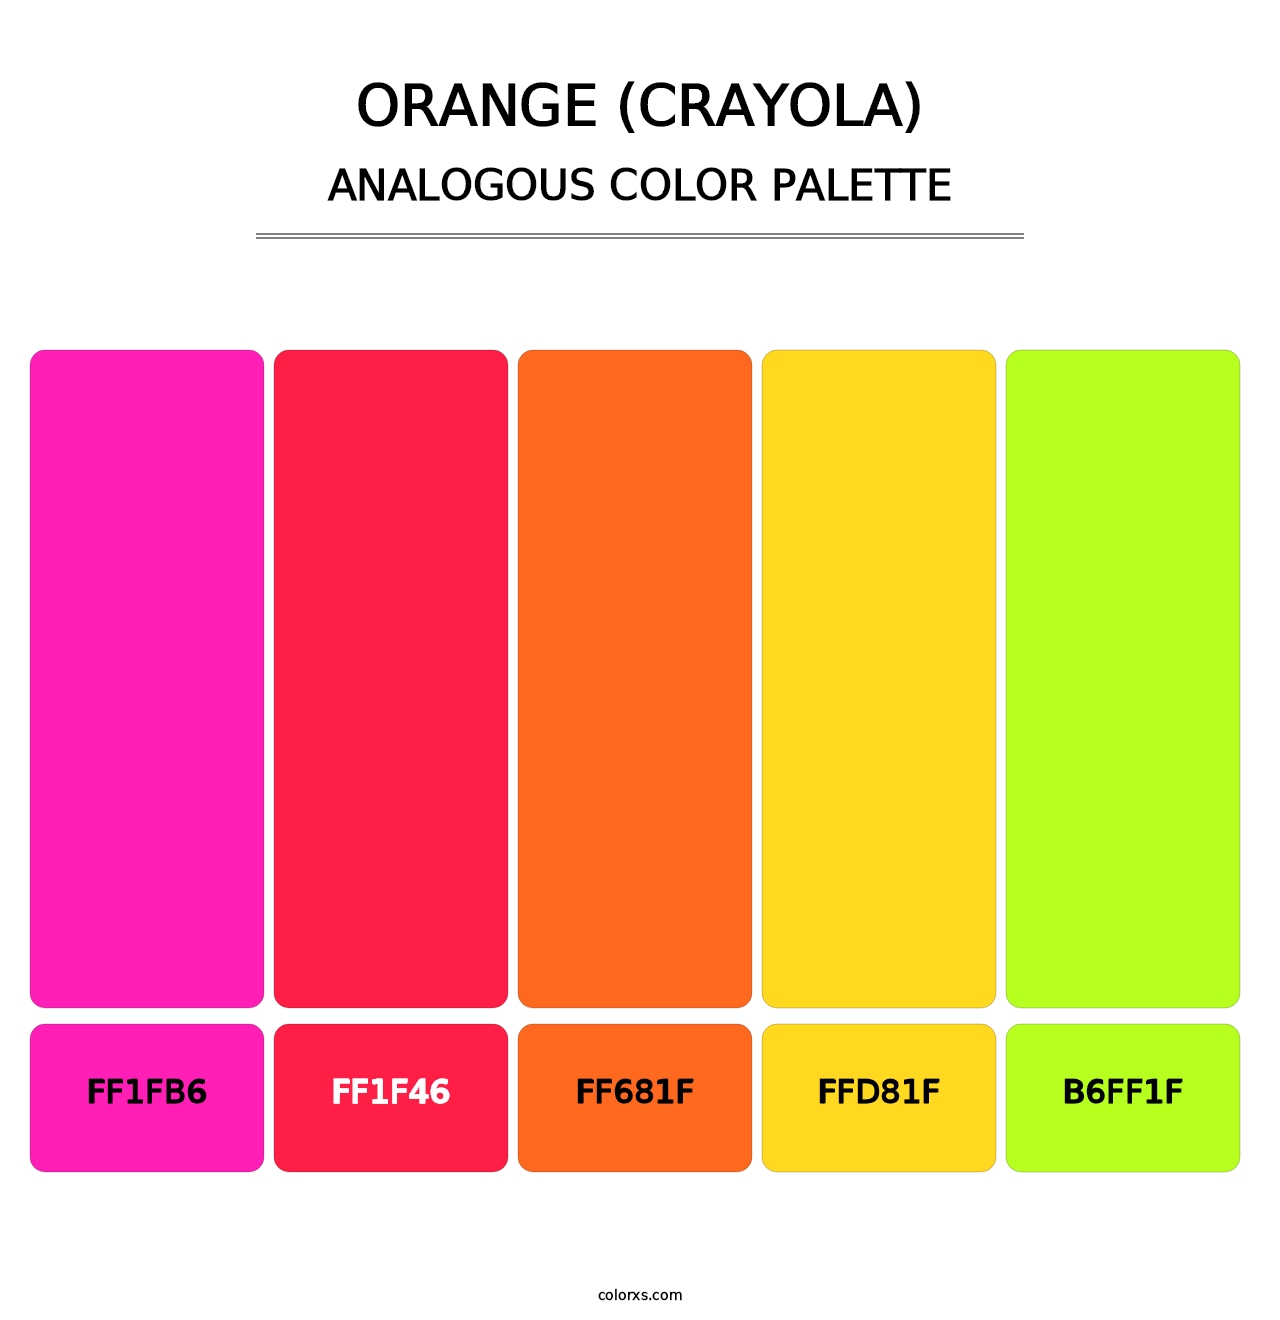 Orange (Crayola) - Analogous Color Palette